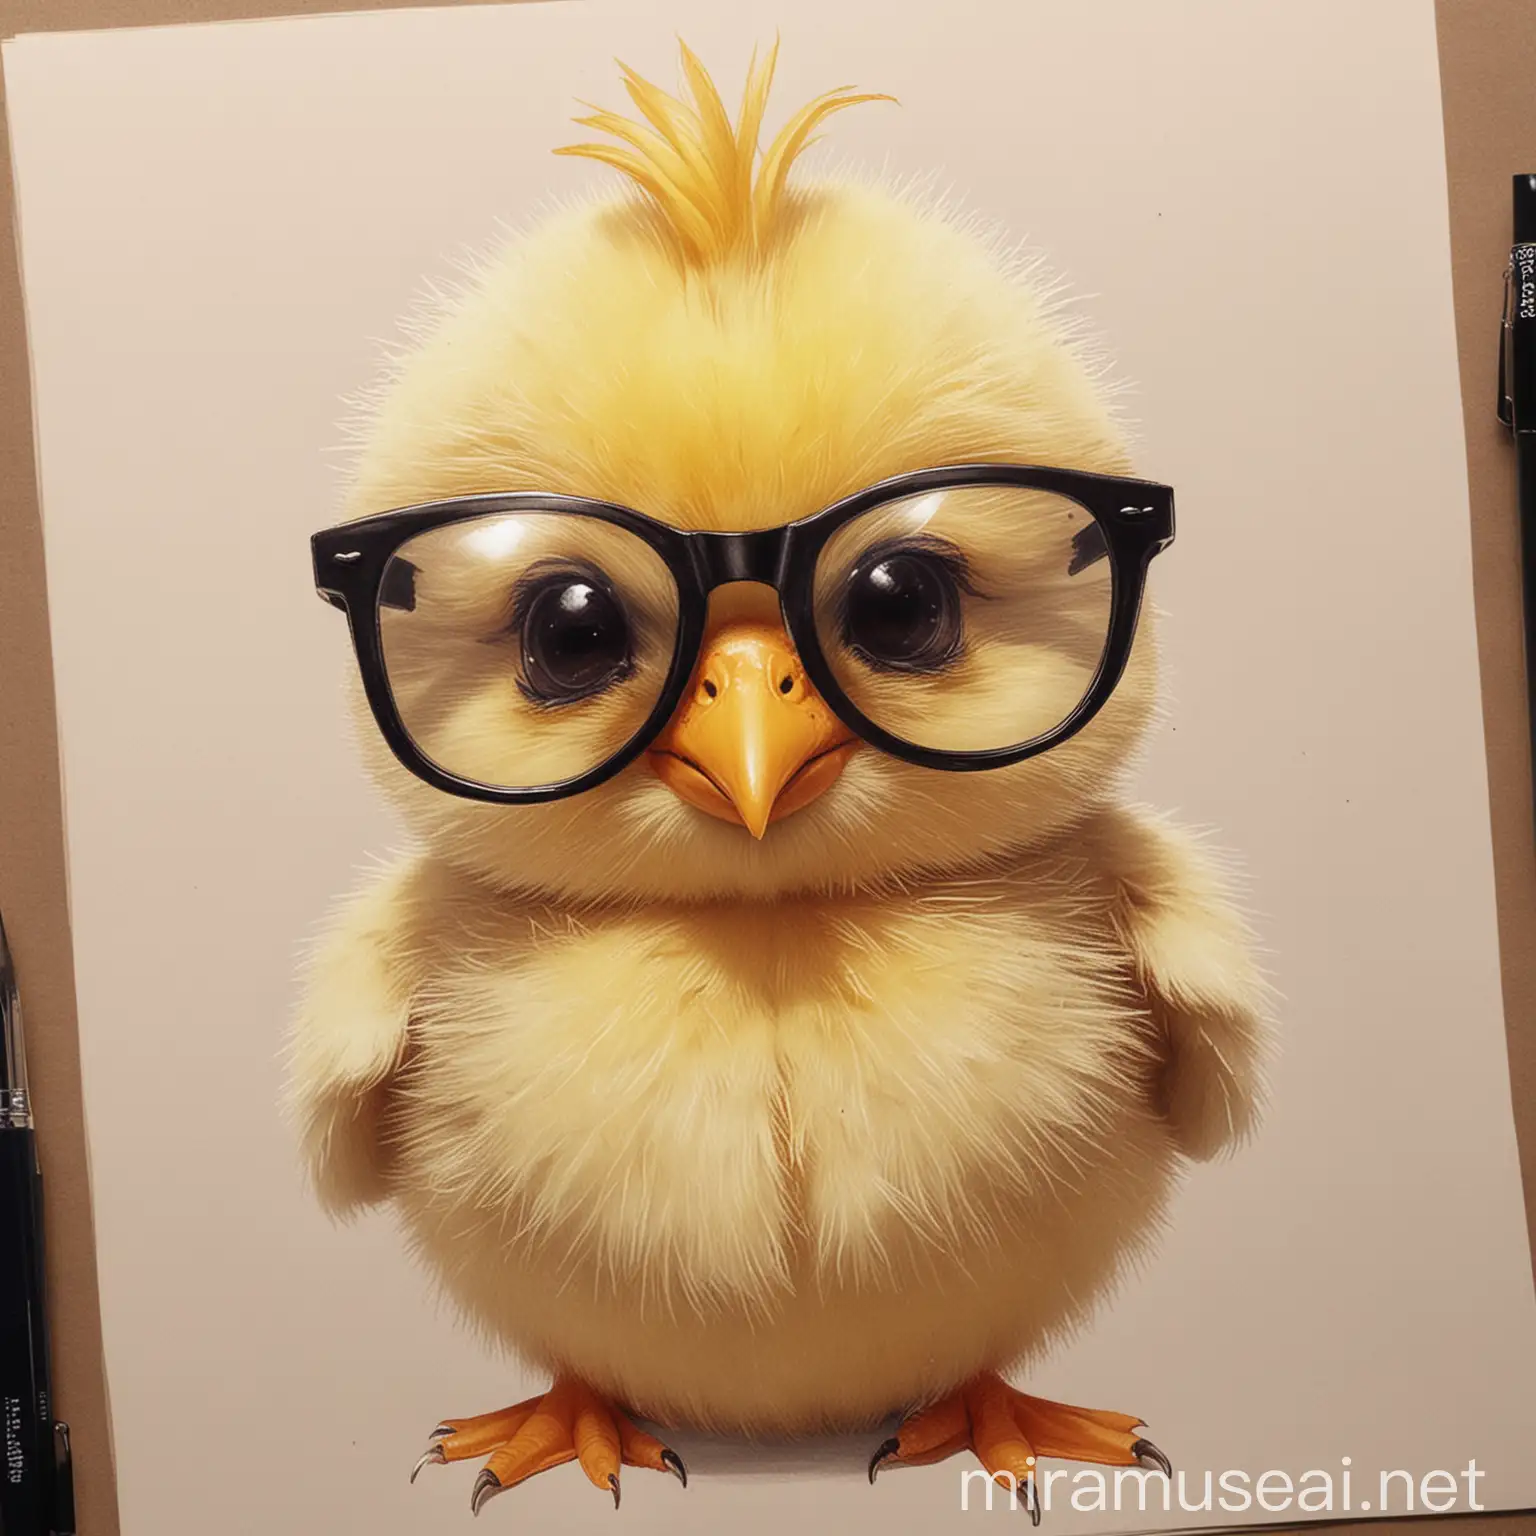 draw chicks with sunglasses